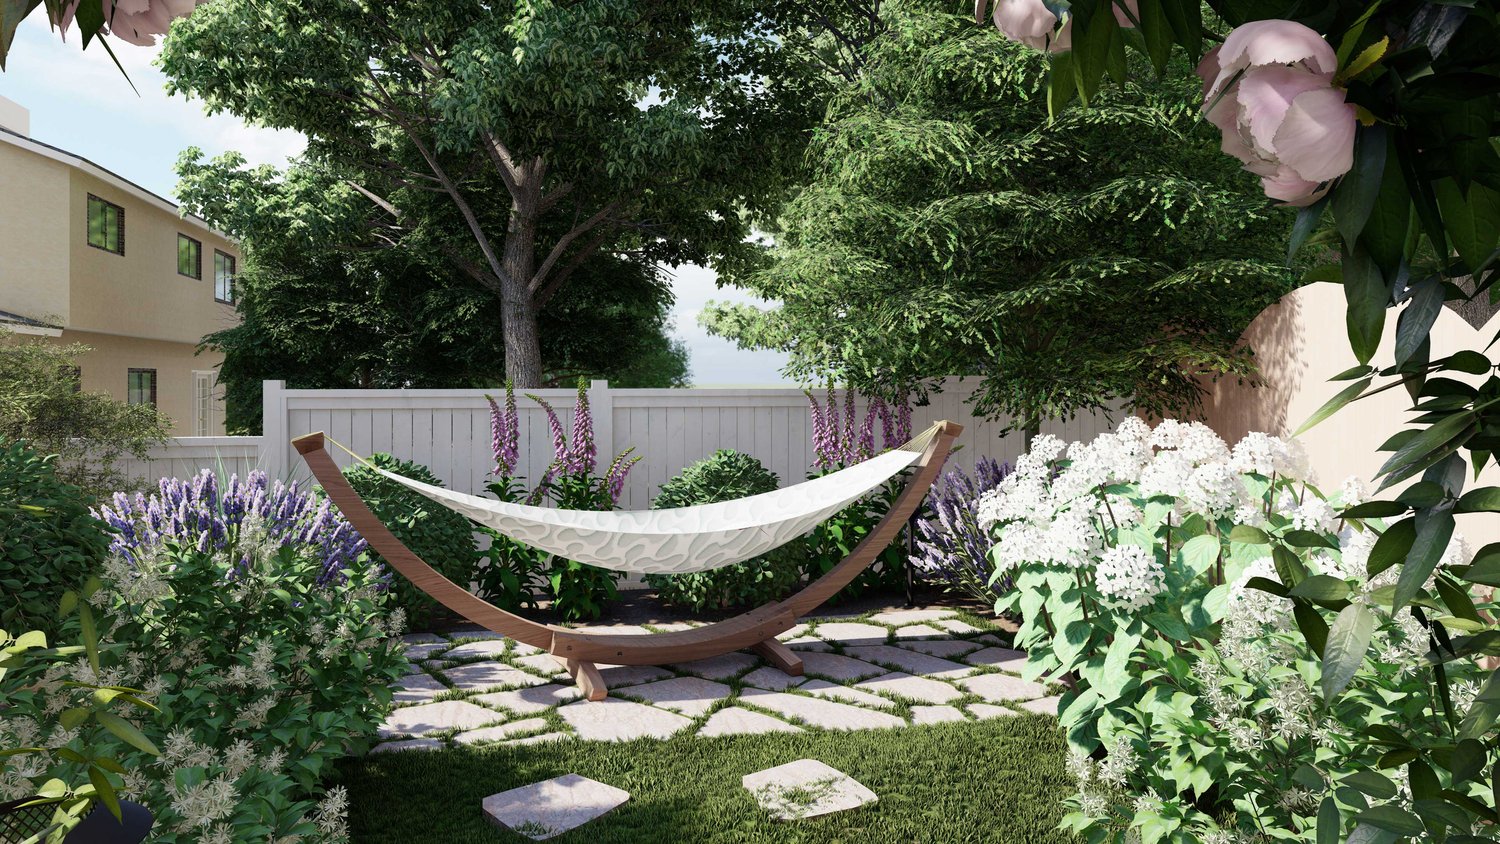 Arlington beautiful backyard garden with concrete paver patio and hammock